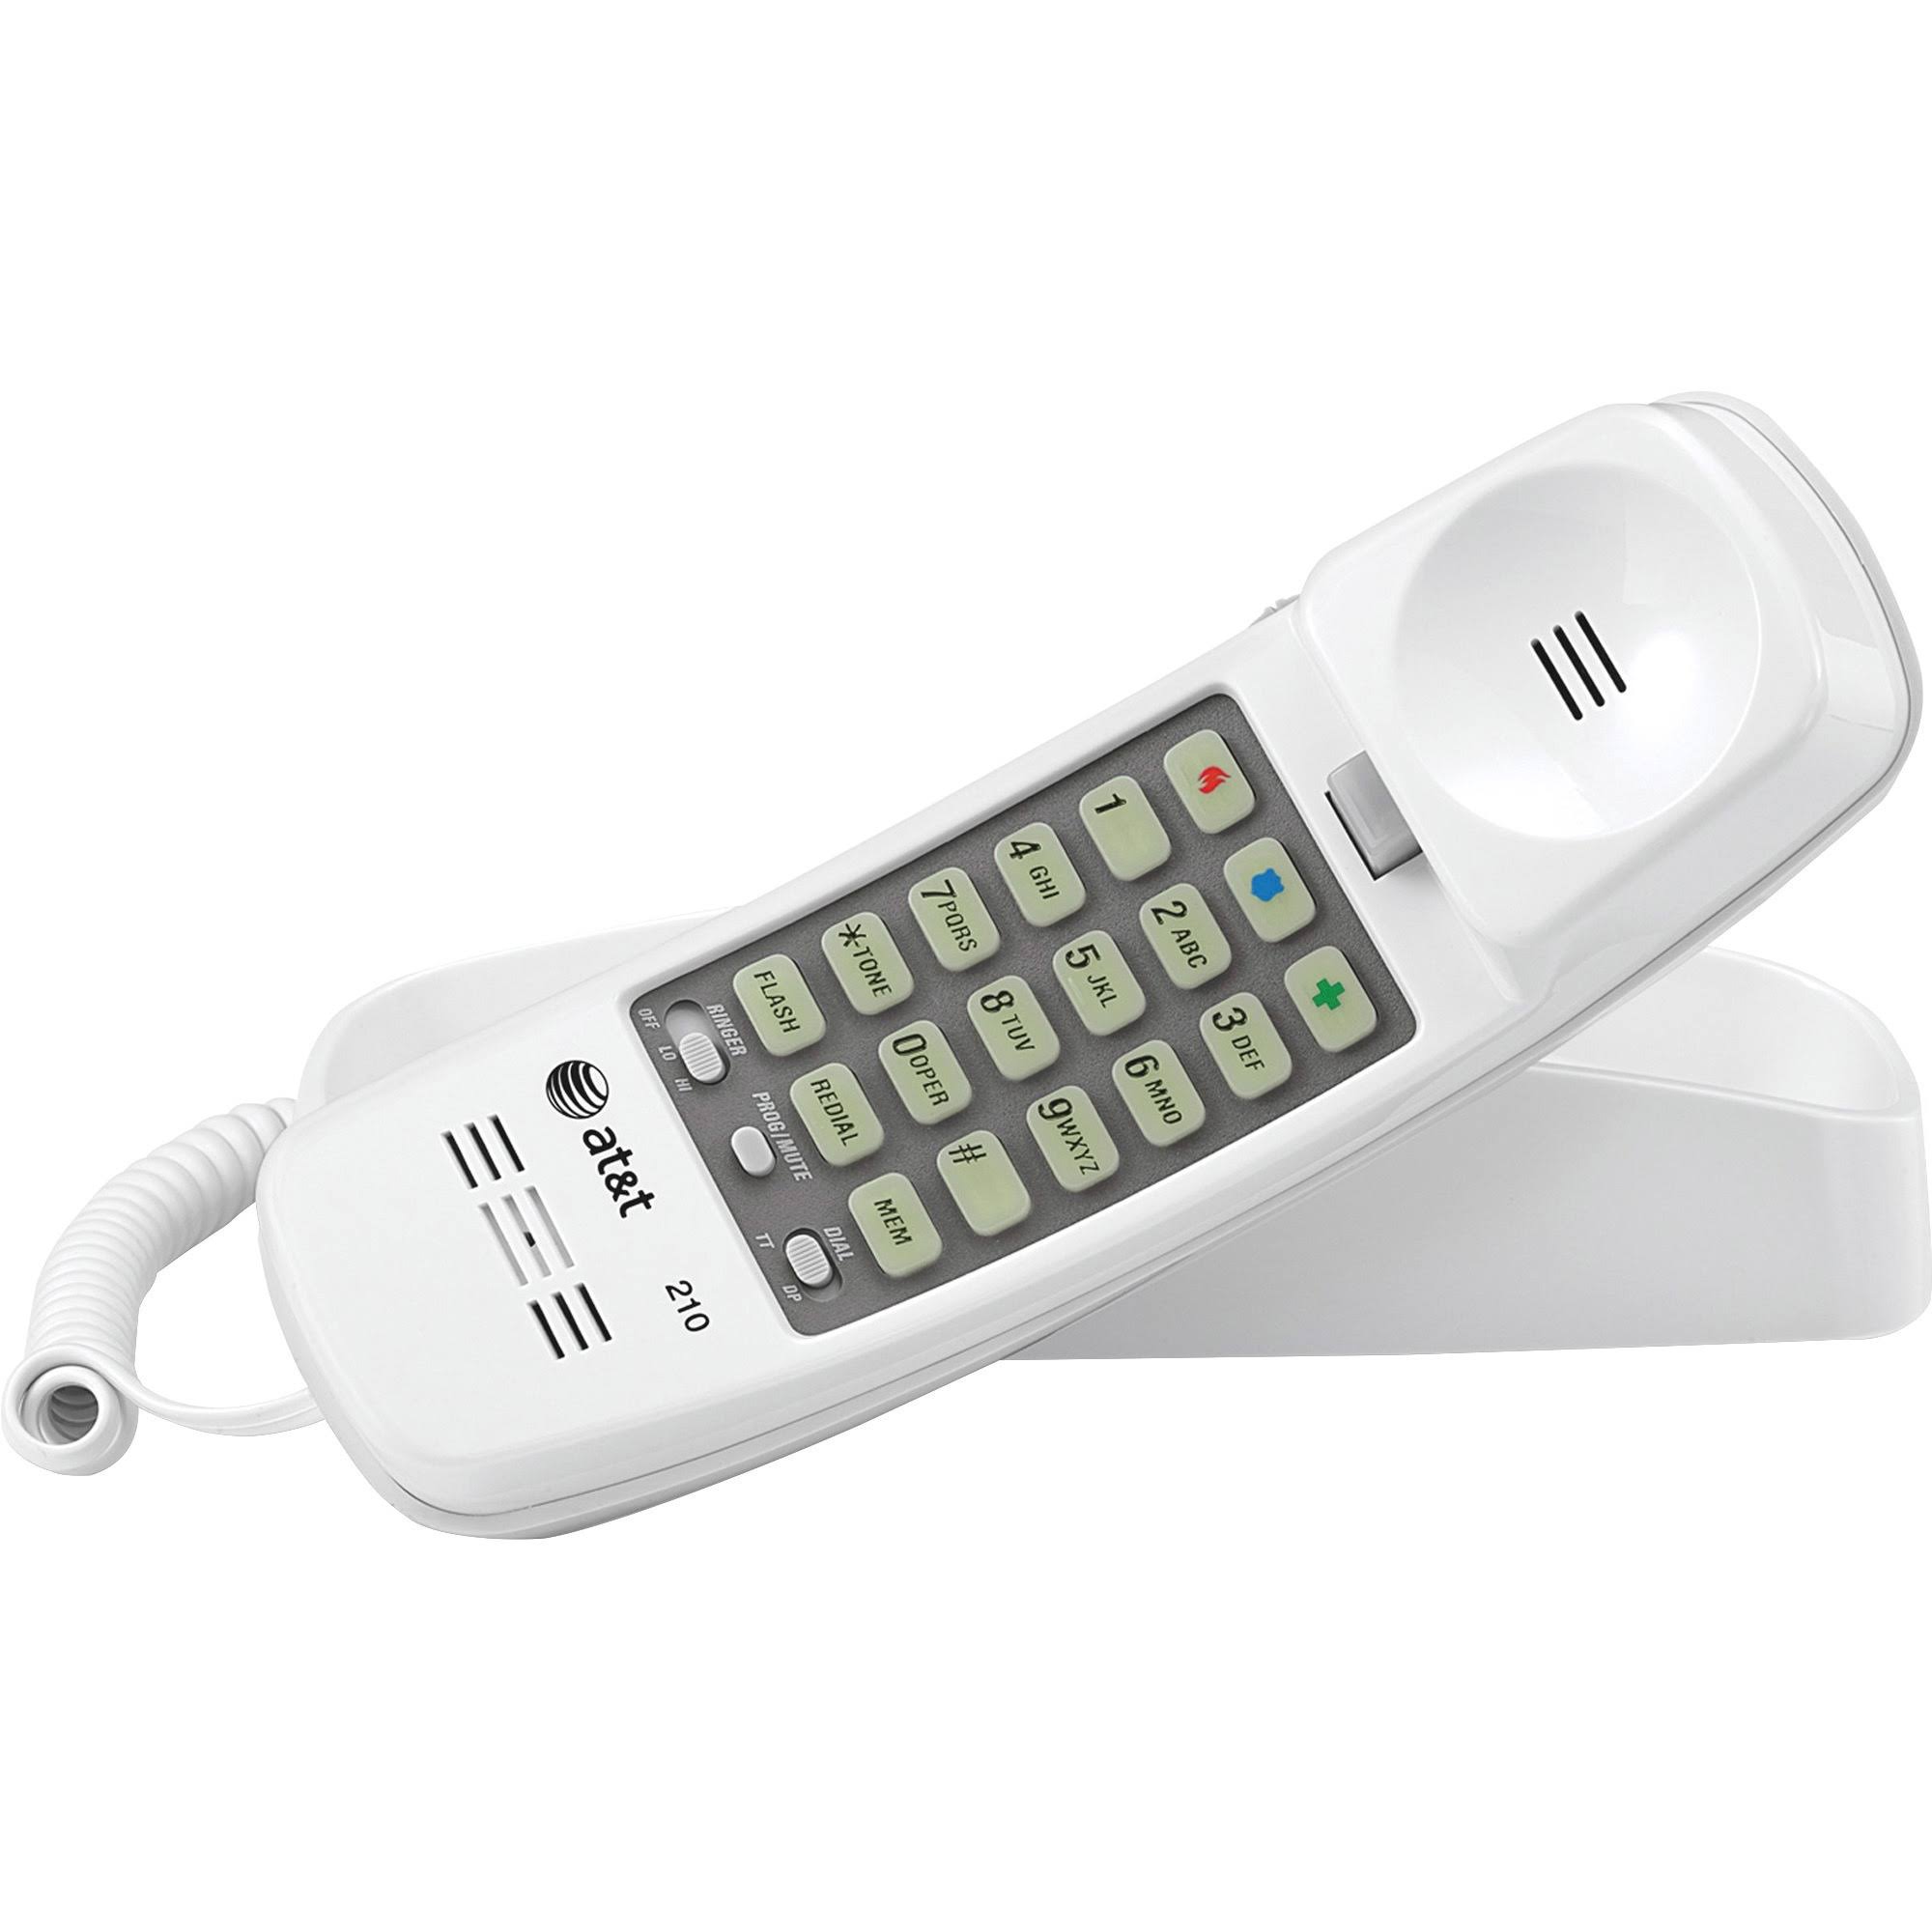 Vtech Communications Trimline Corded Telephone - White